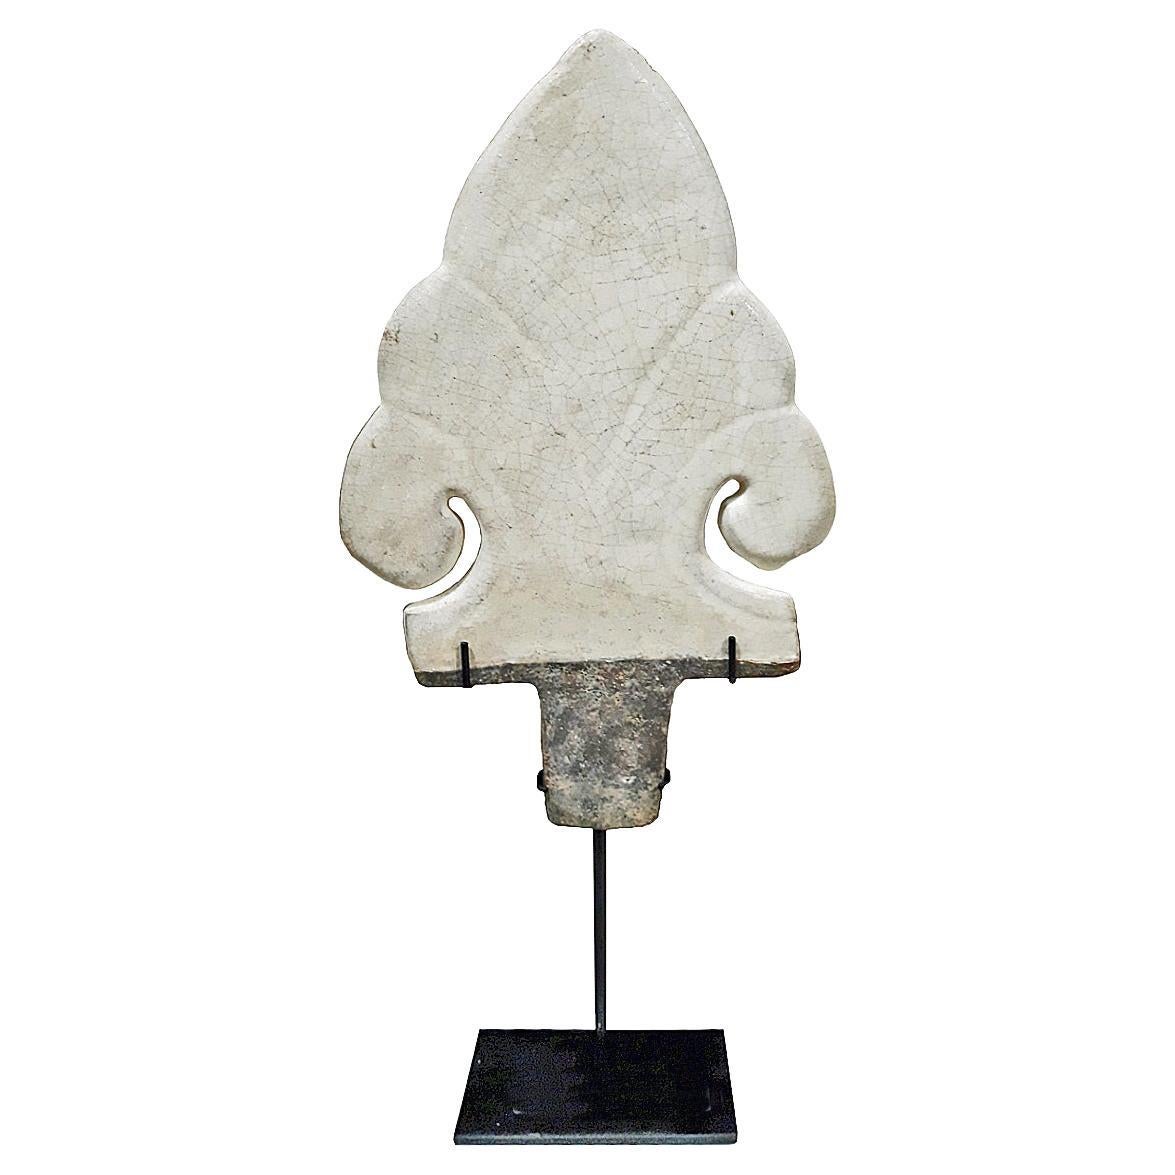 Ceramic Shield Ornament from Thailand, 17th Century